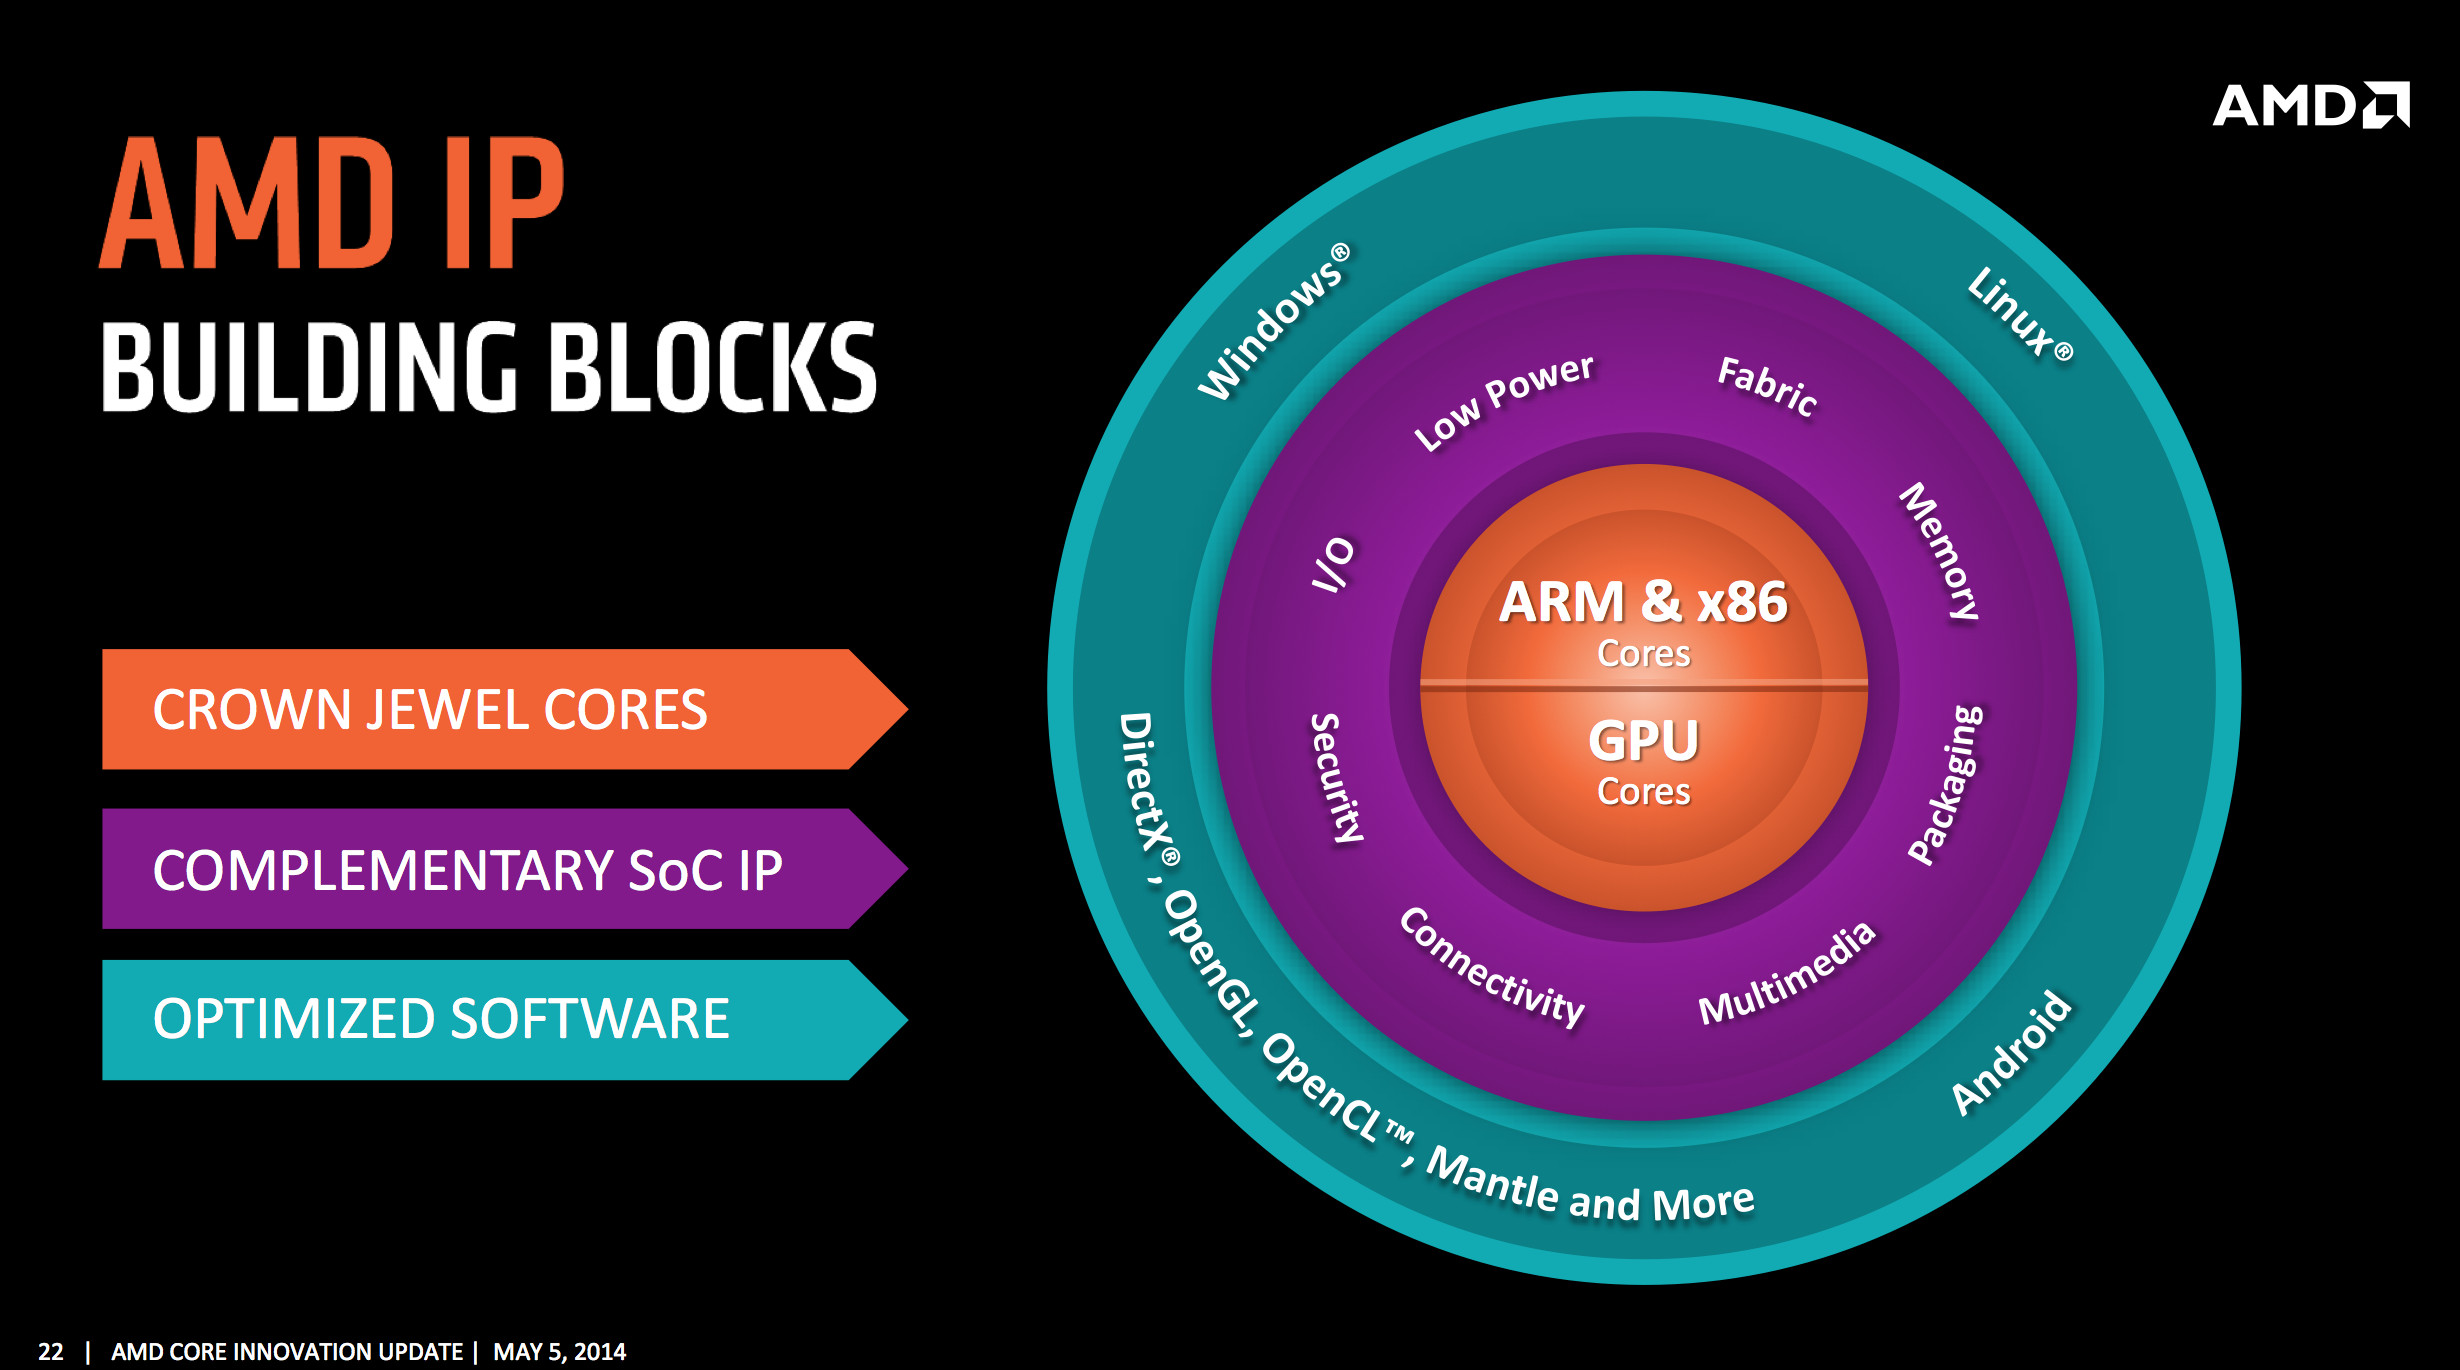 AMD building blocks